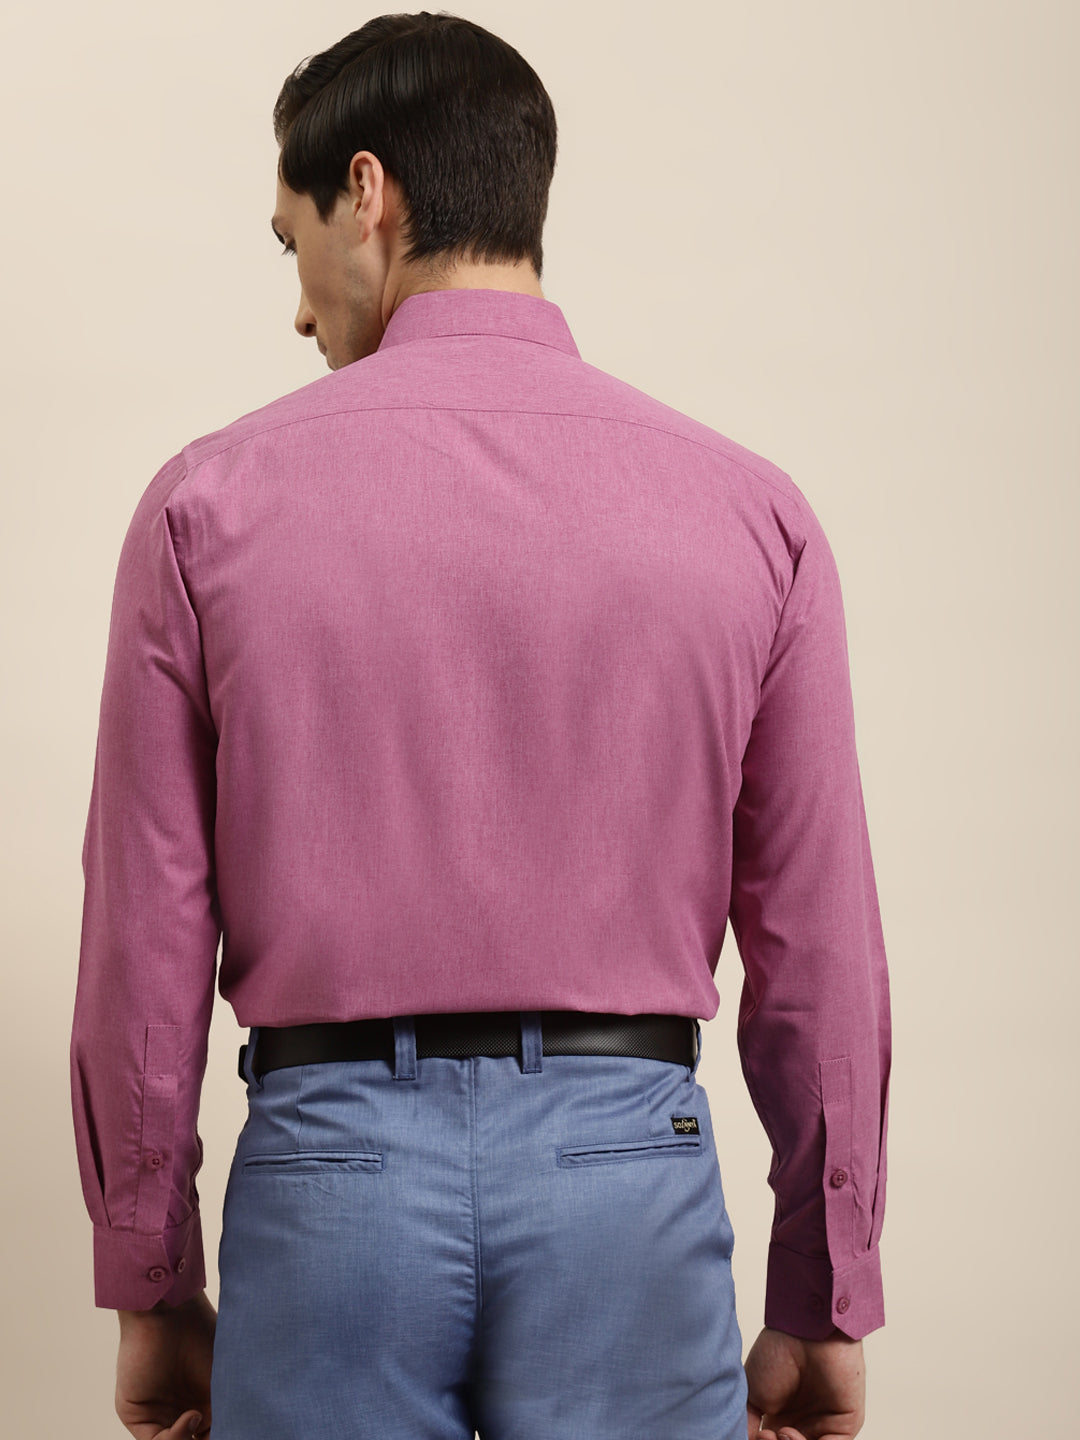 Men's Cotton Magenta Formal Classic Shirt - Sojanya